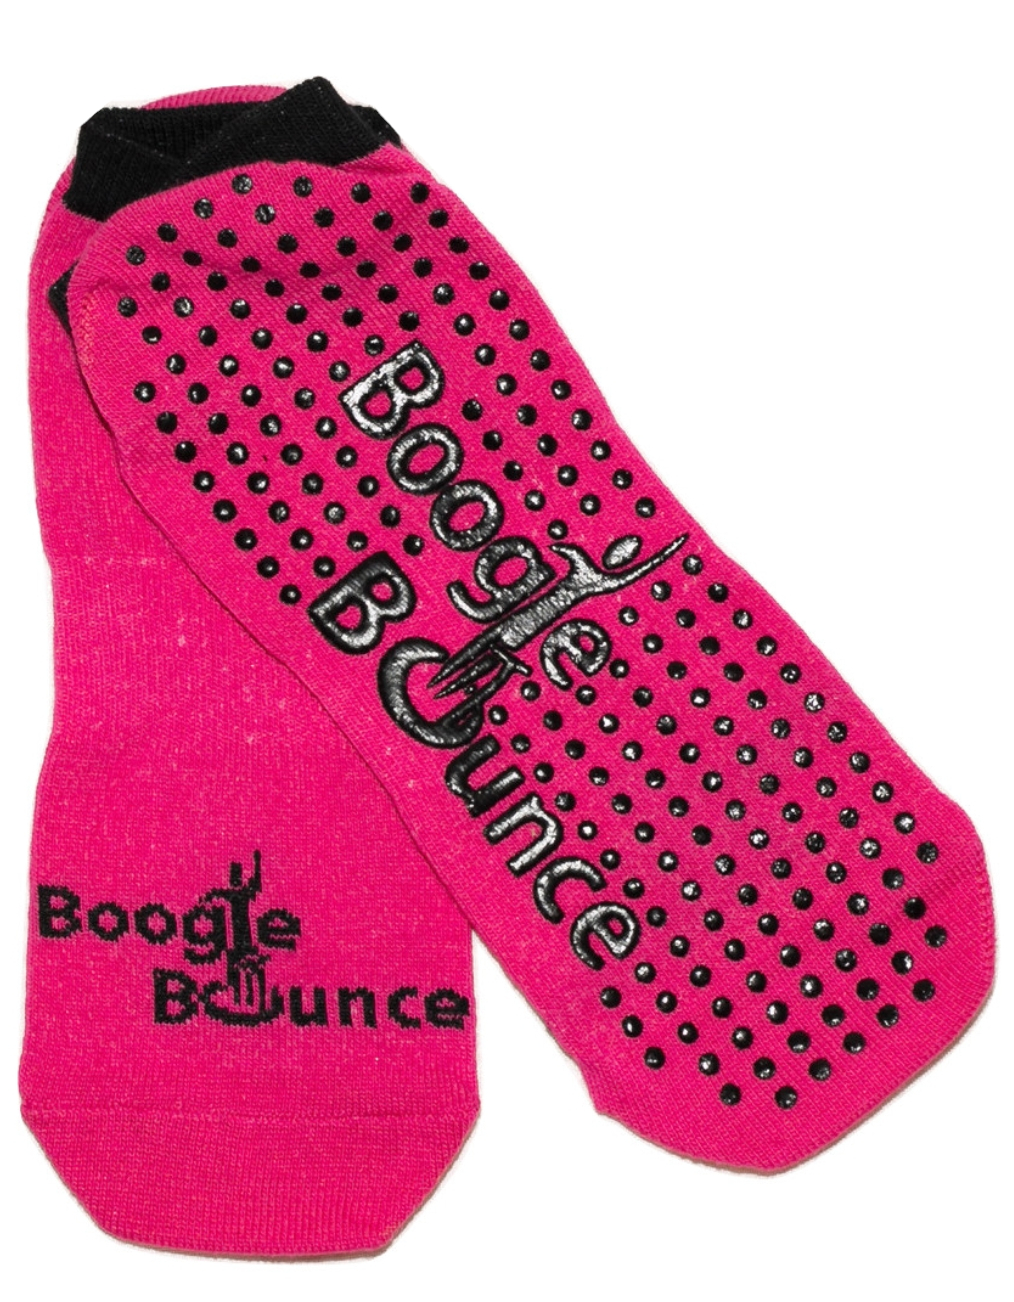 Boogie Bounce Socks